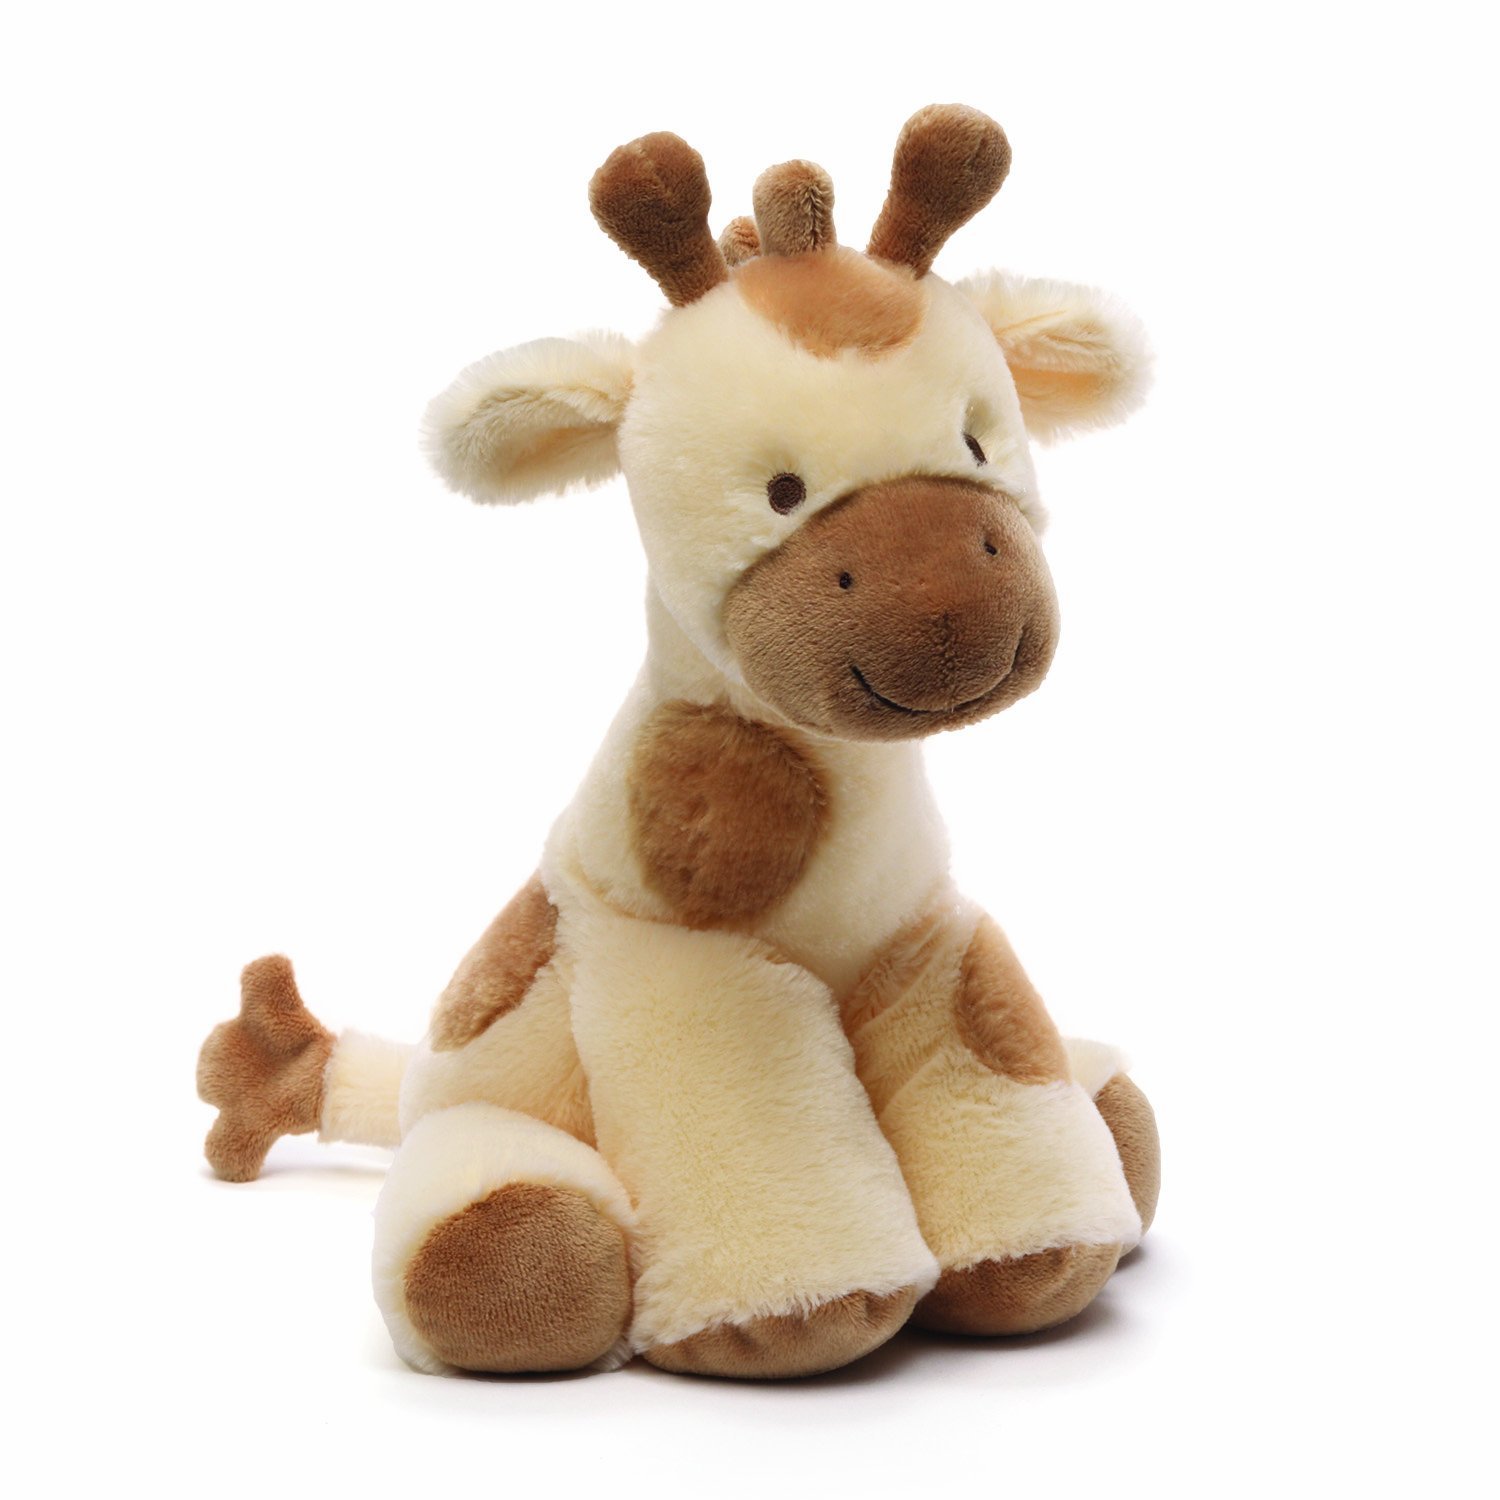 Amazon.com: Gund Niffer Giraffe Musical Baby Stuffed Animal: Toy: Baby